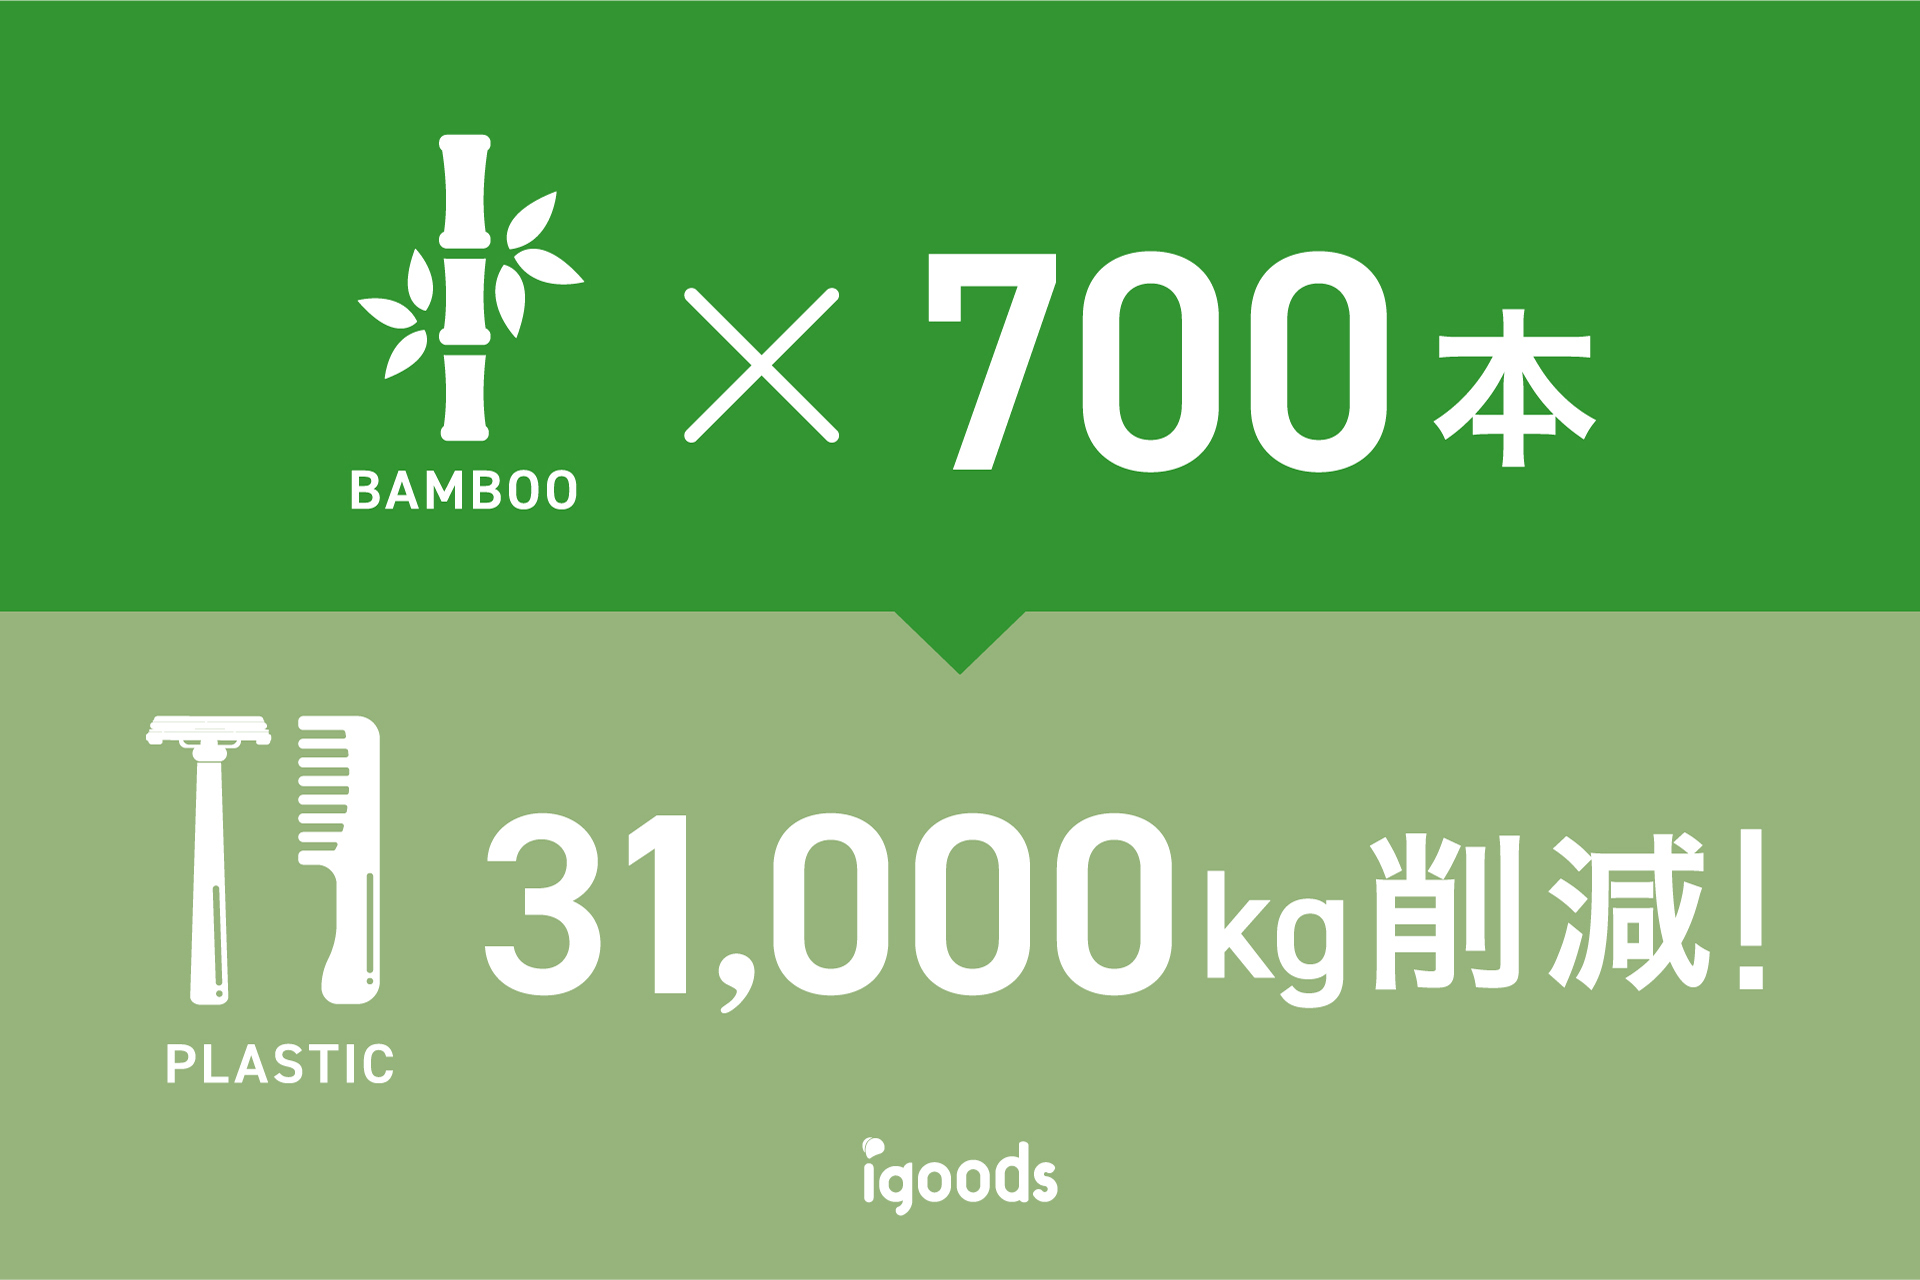 SUS organic発売開始から2年間。約700本の竹使用でプラスチック約31,000kg削減